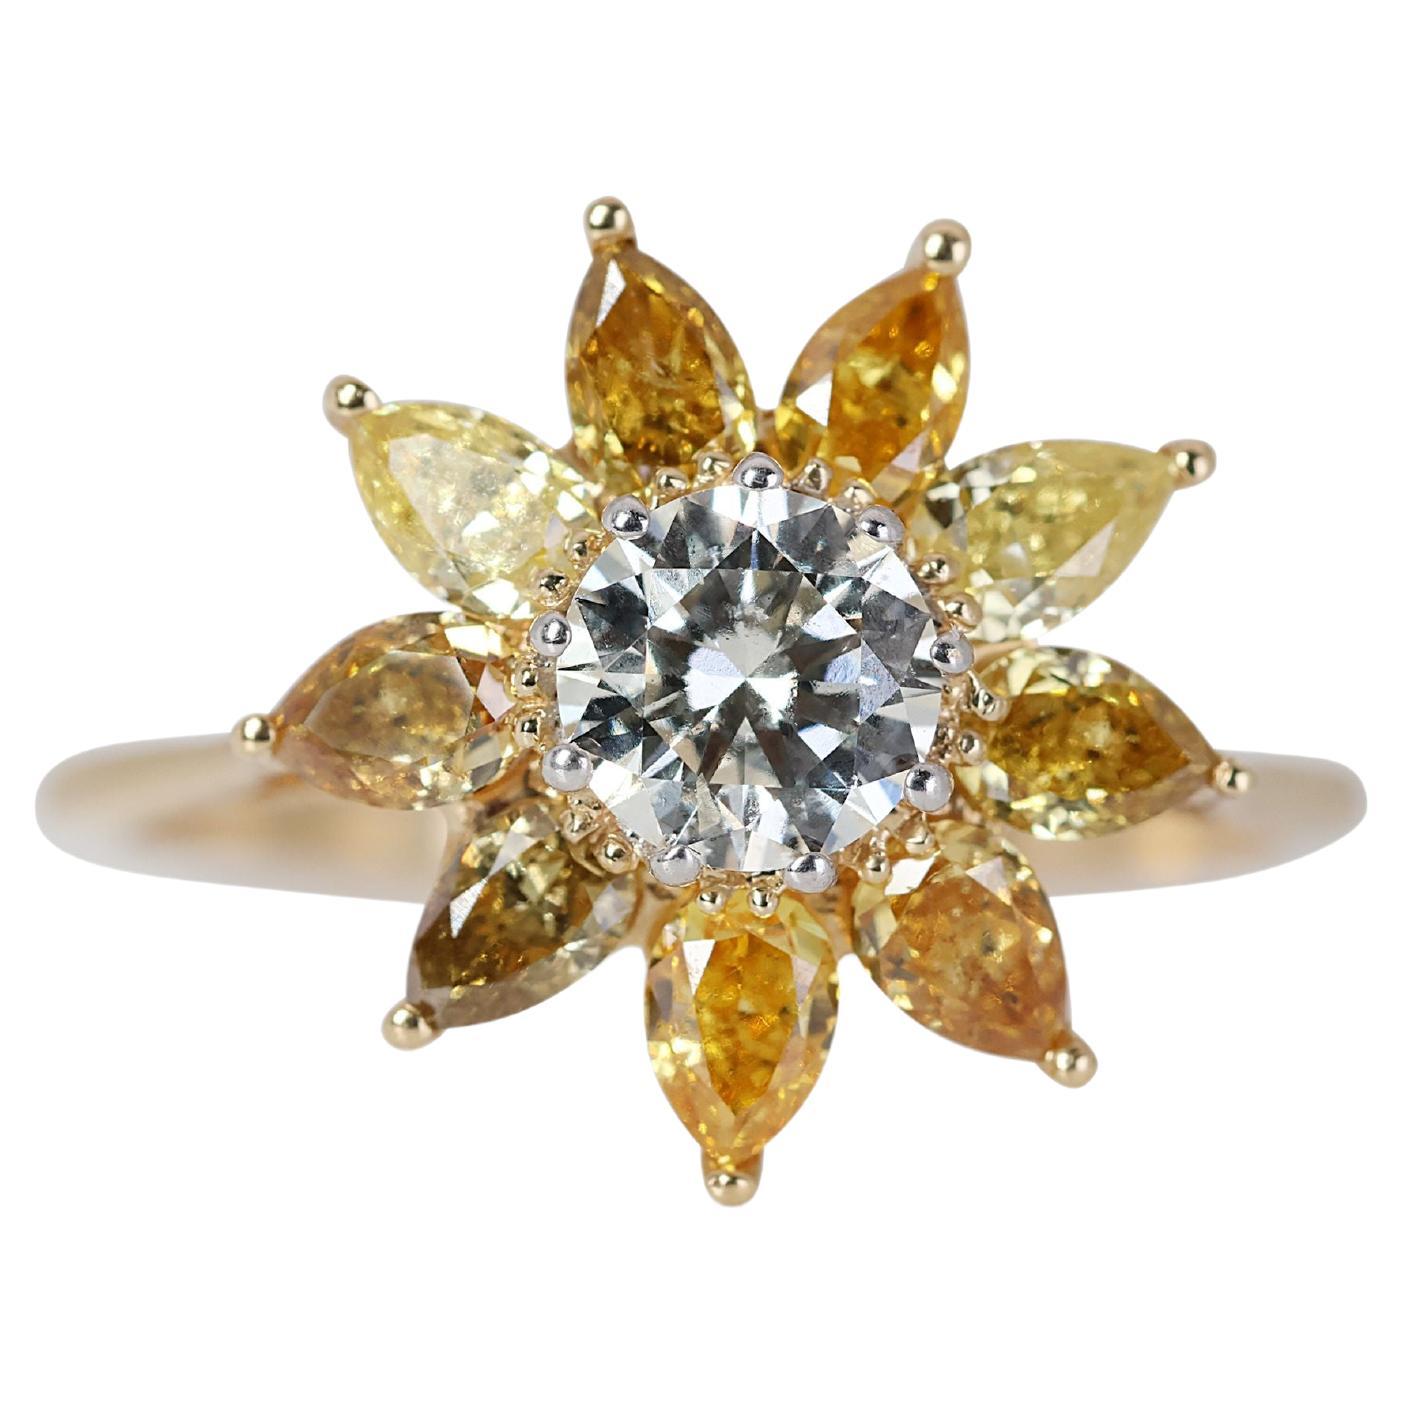 Beautiful 18K Yellow Gold Diamond Ring with 1.160 Ct Natural Diamonds, NGI Cert